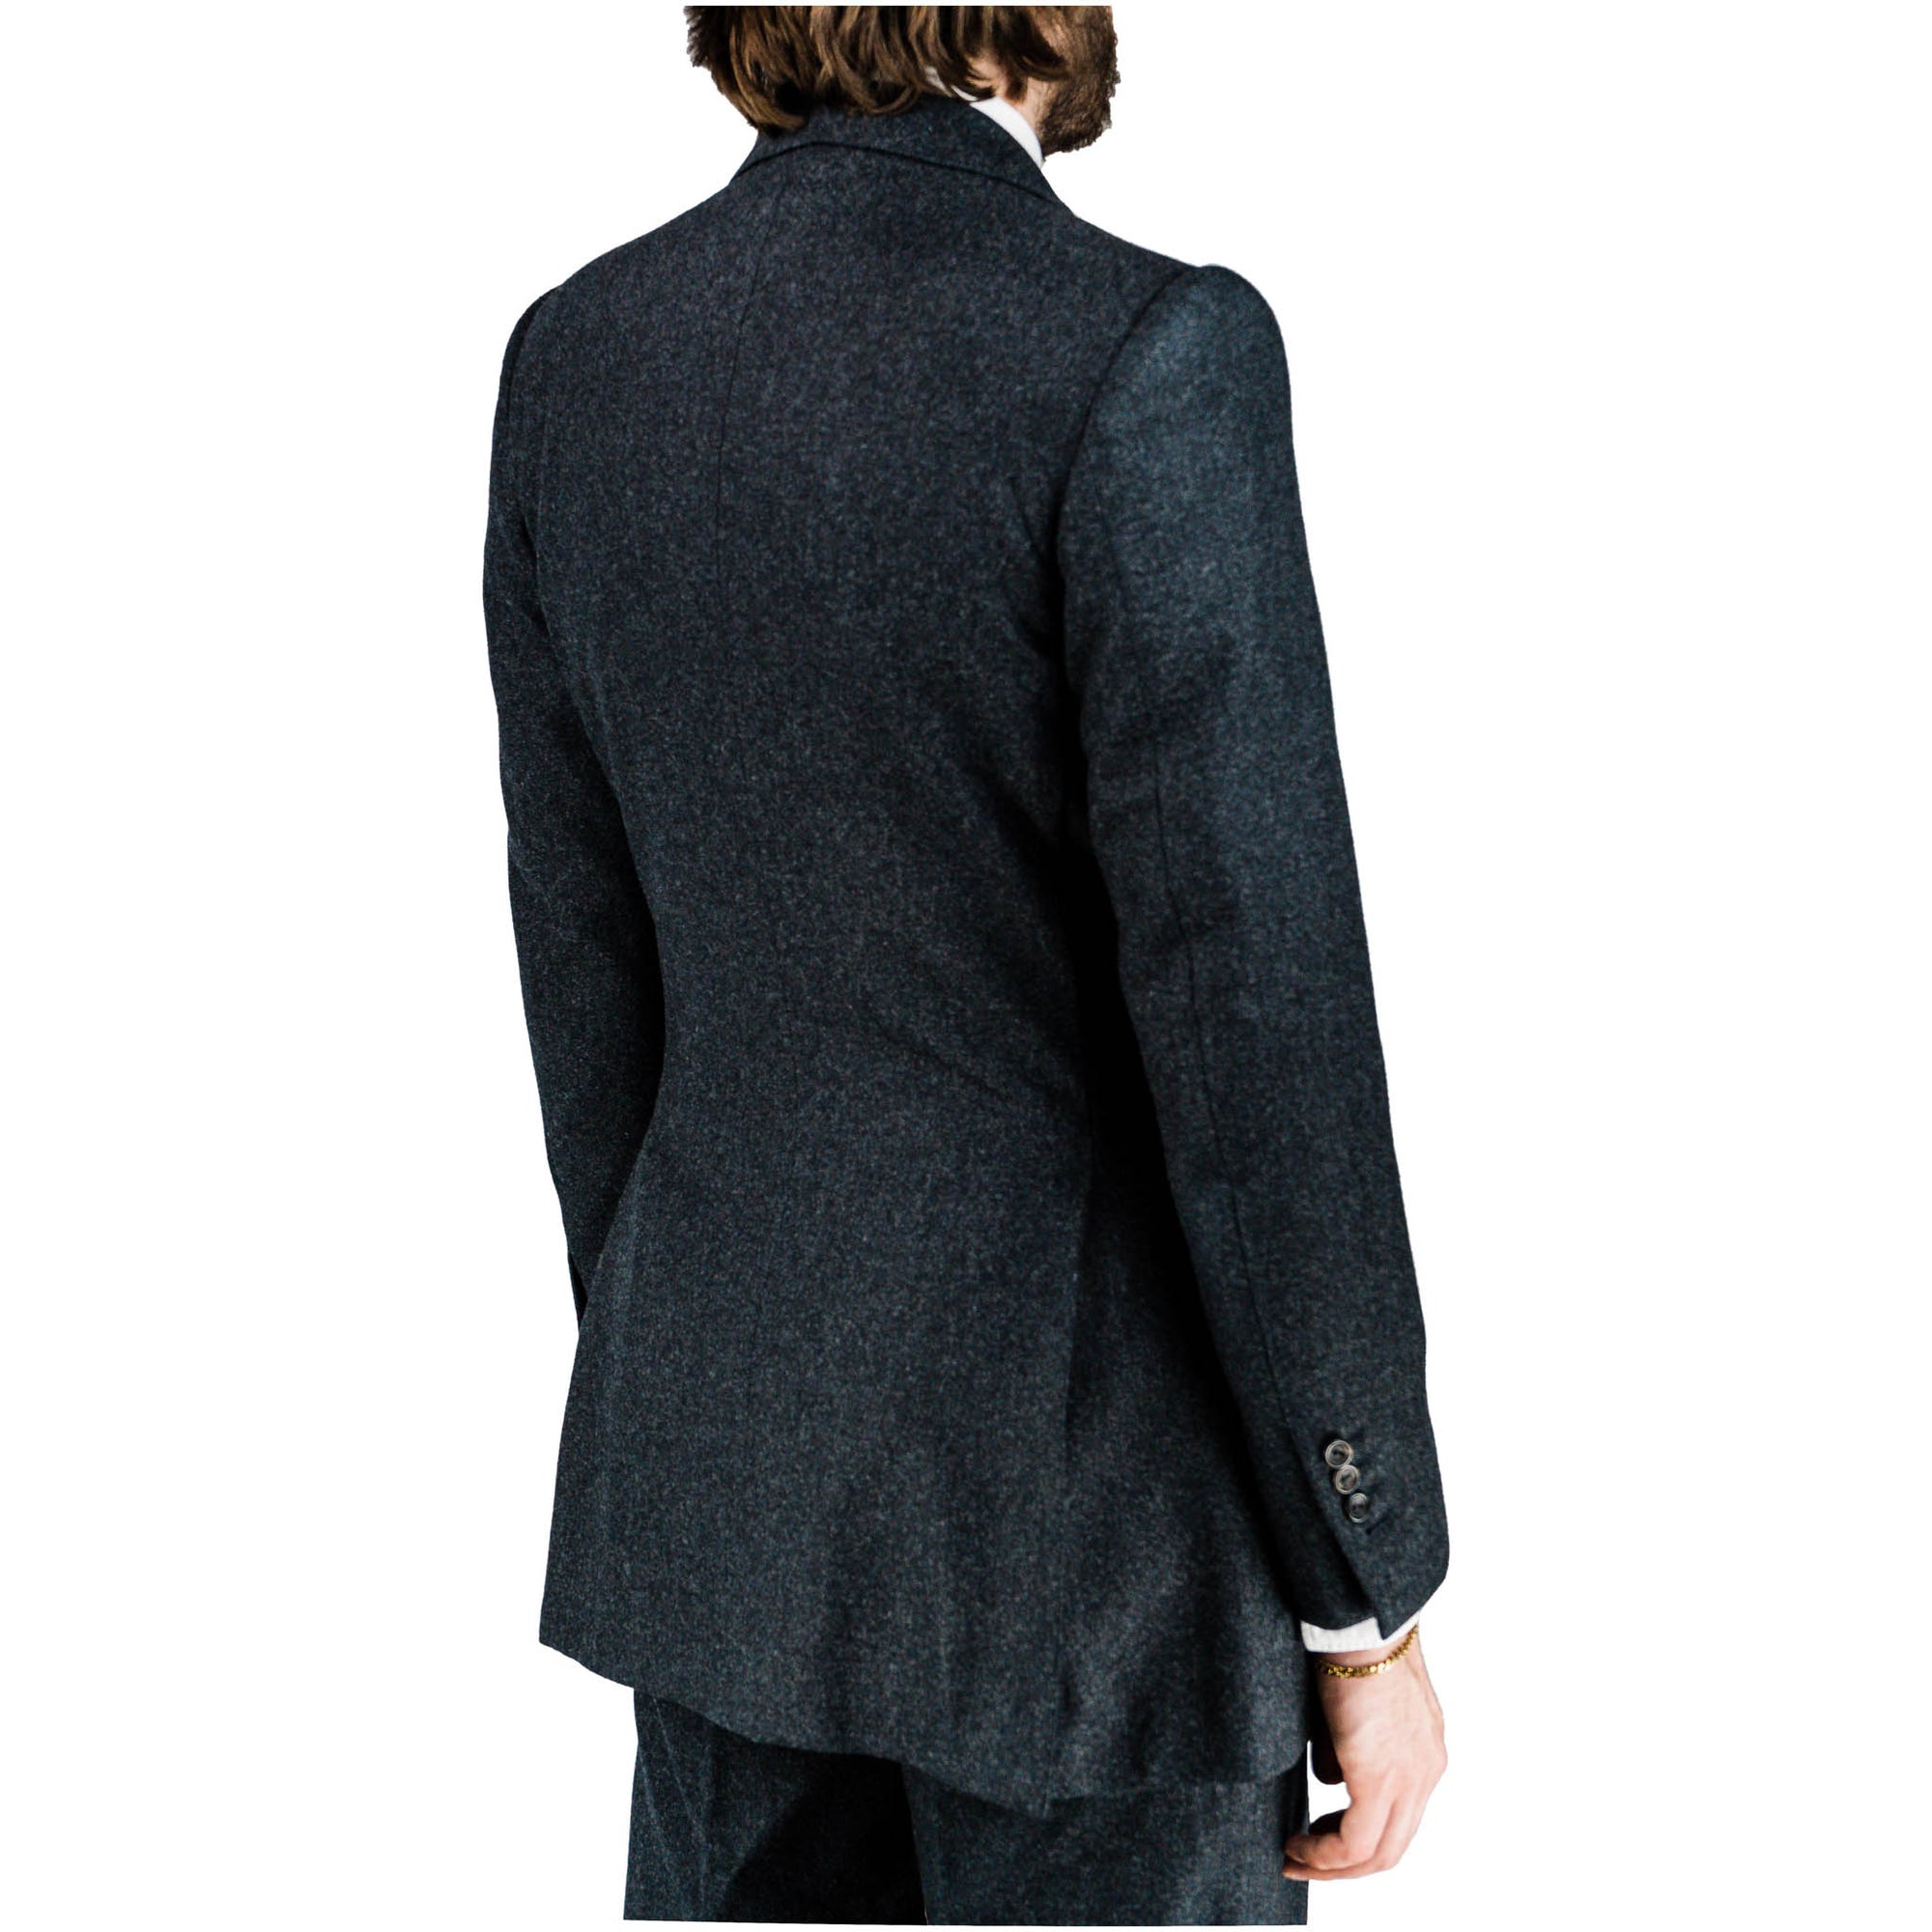 Suit - Charcoal flannel